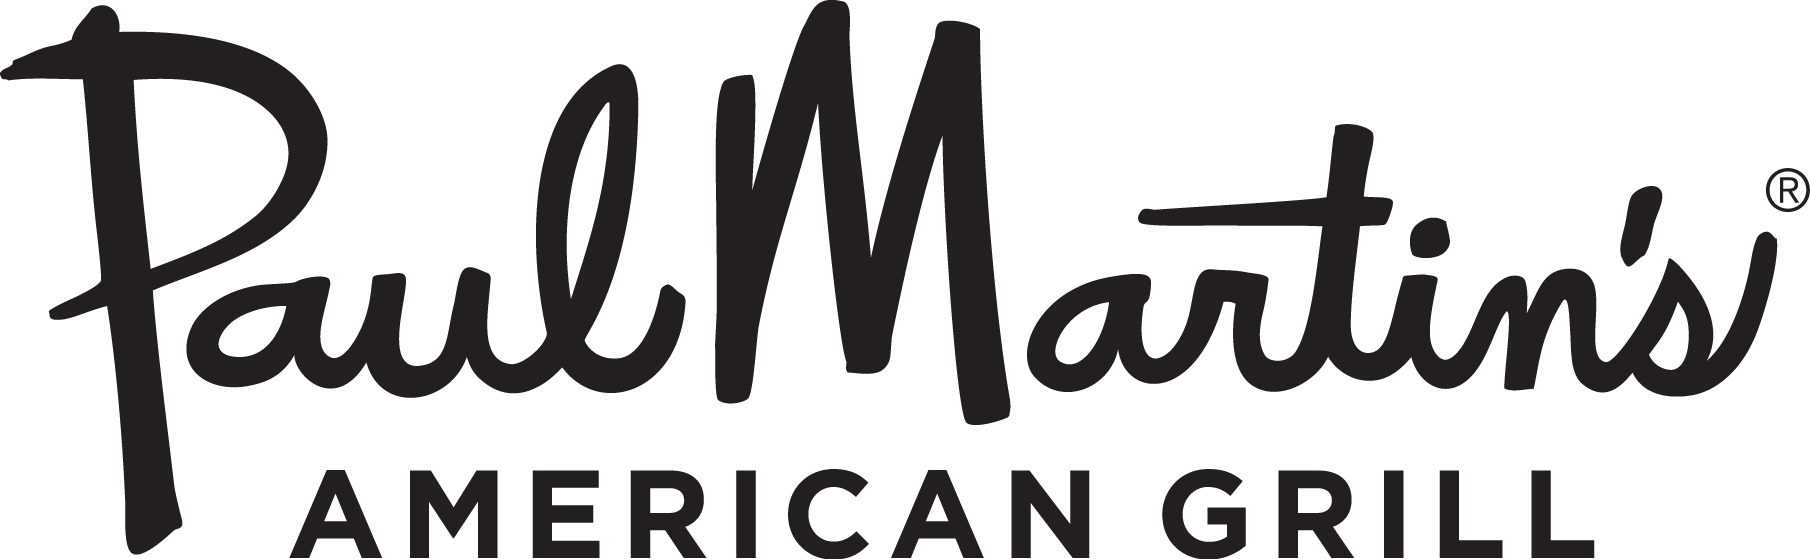 Paul Martin's American Grill Logo